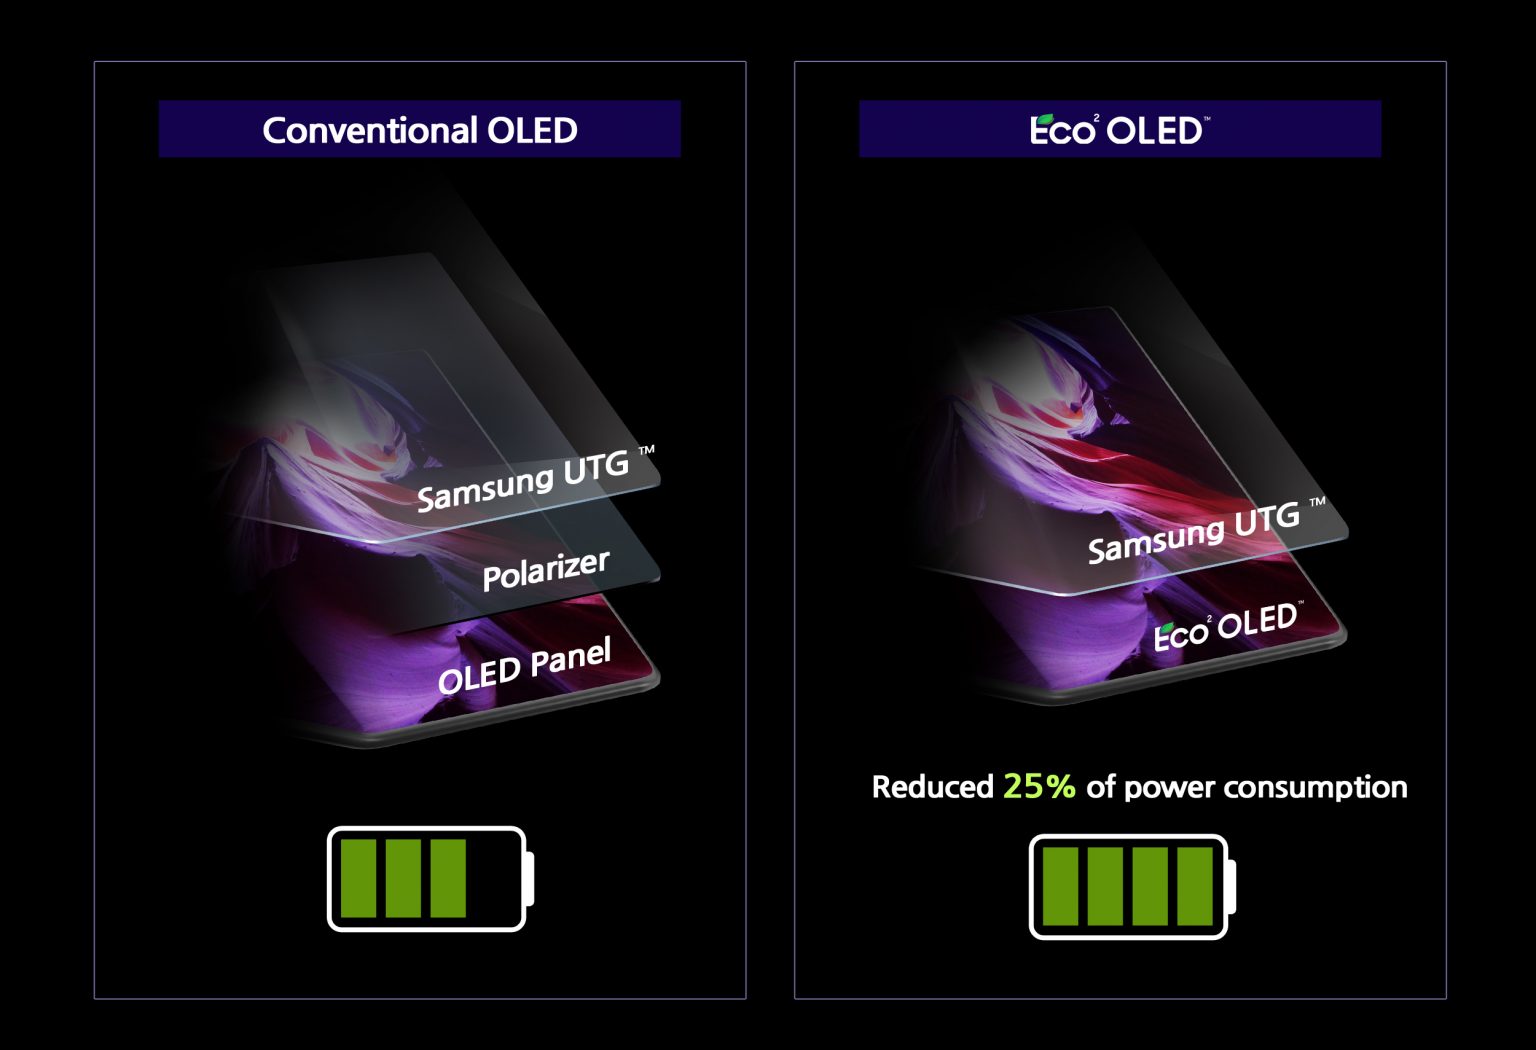 Samsung's Eco 2 OLED display